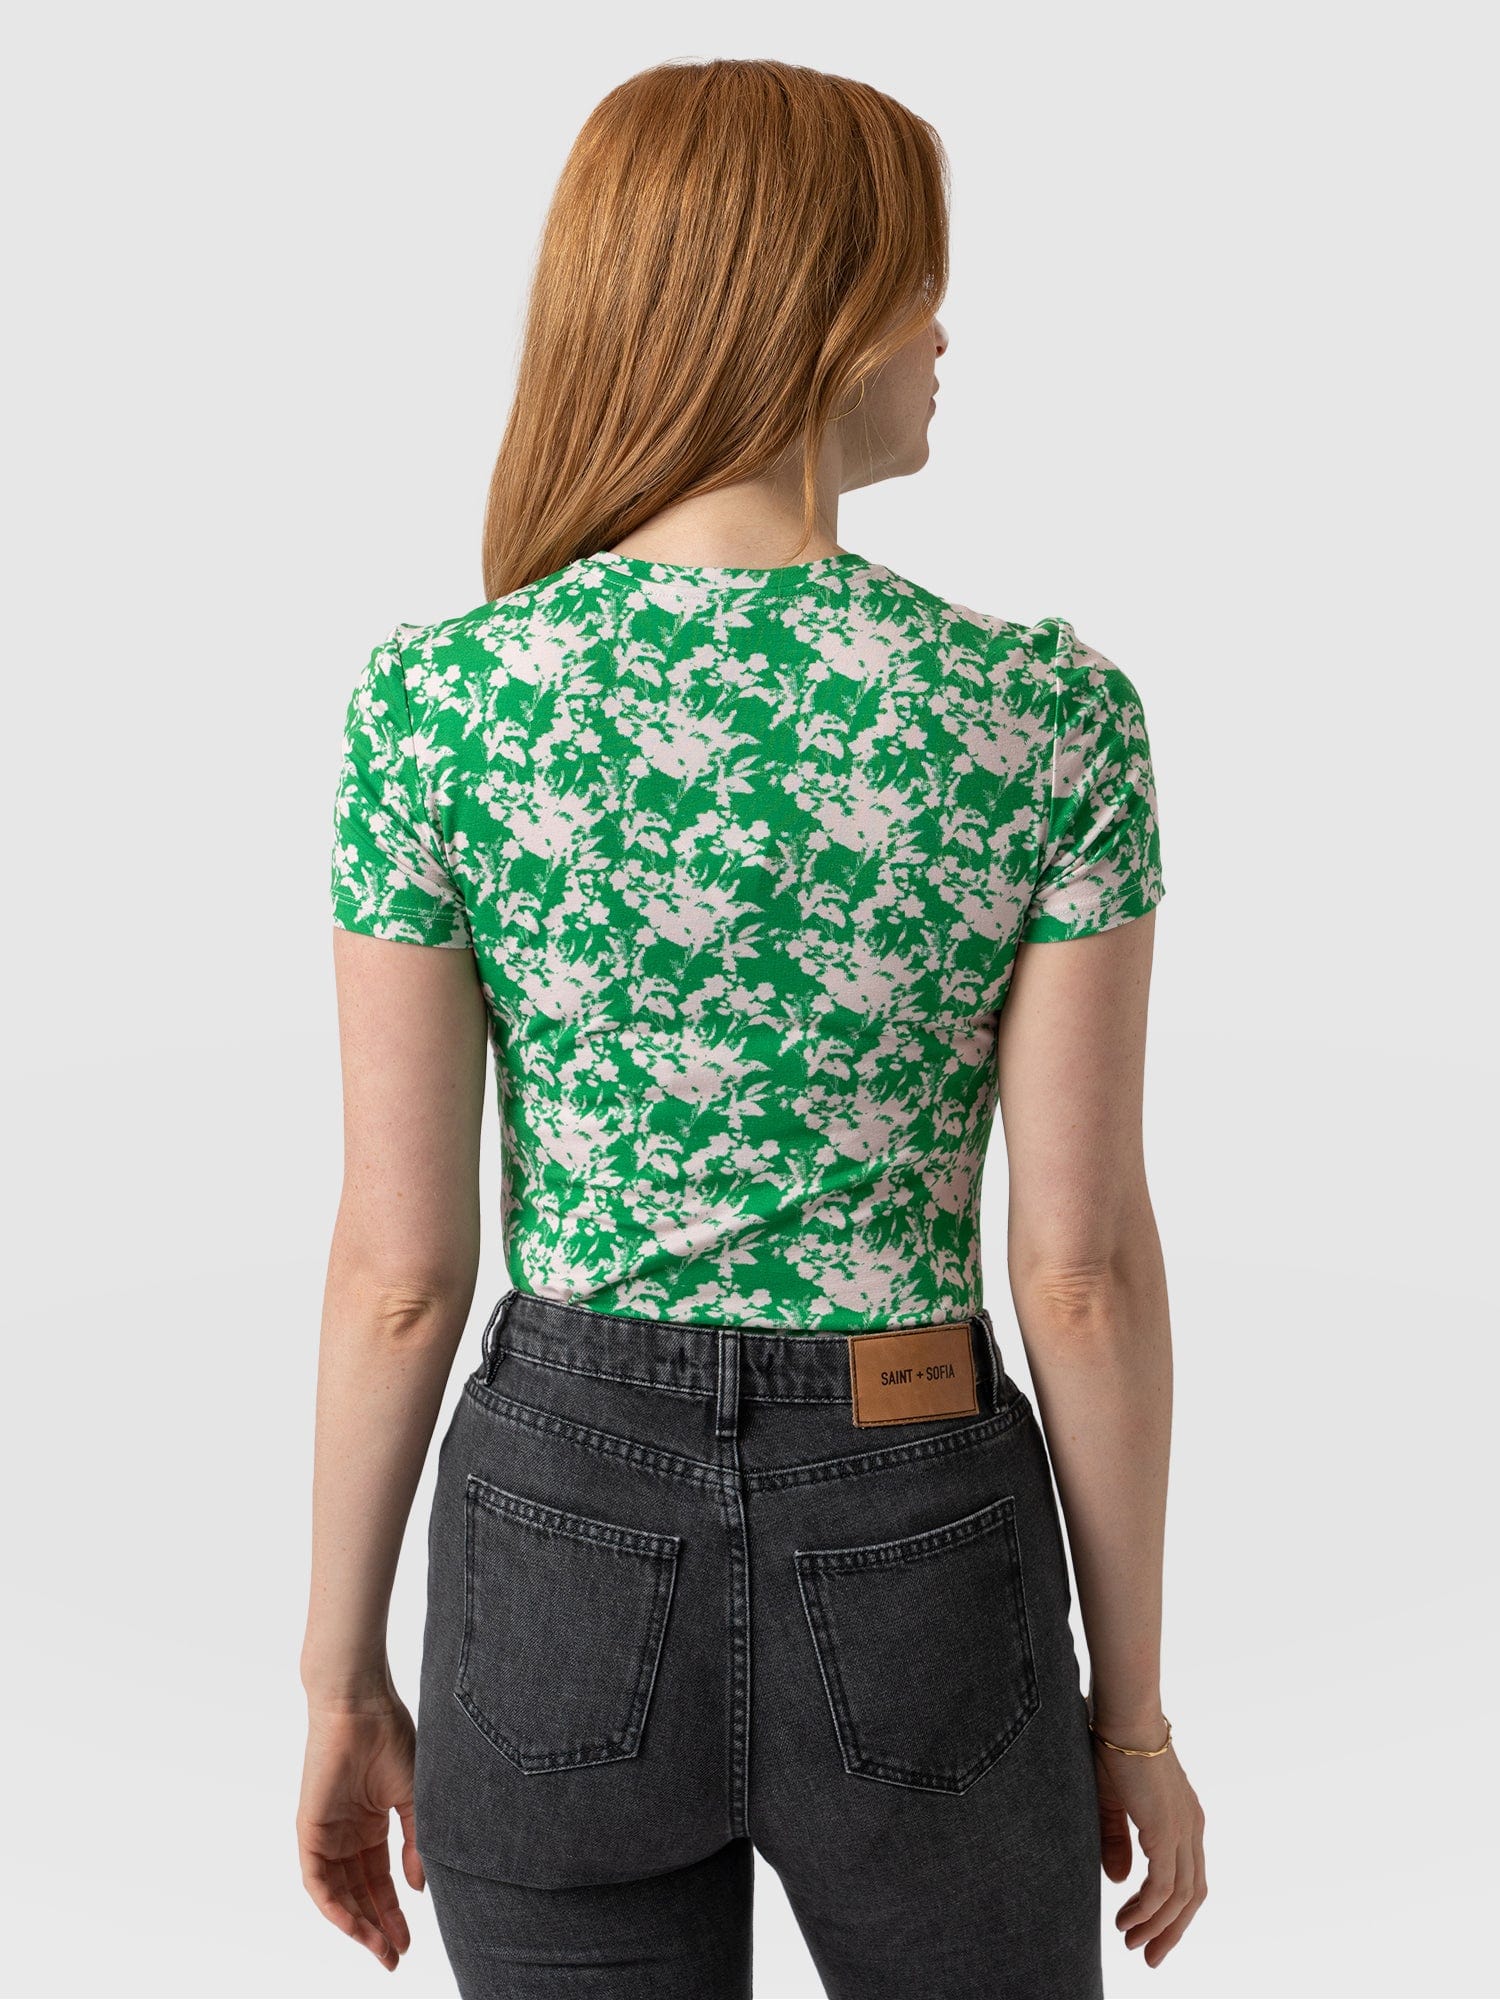 Austen Crew Neck Tee Short Sleeve Green Pixel - Women's T-Shirts